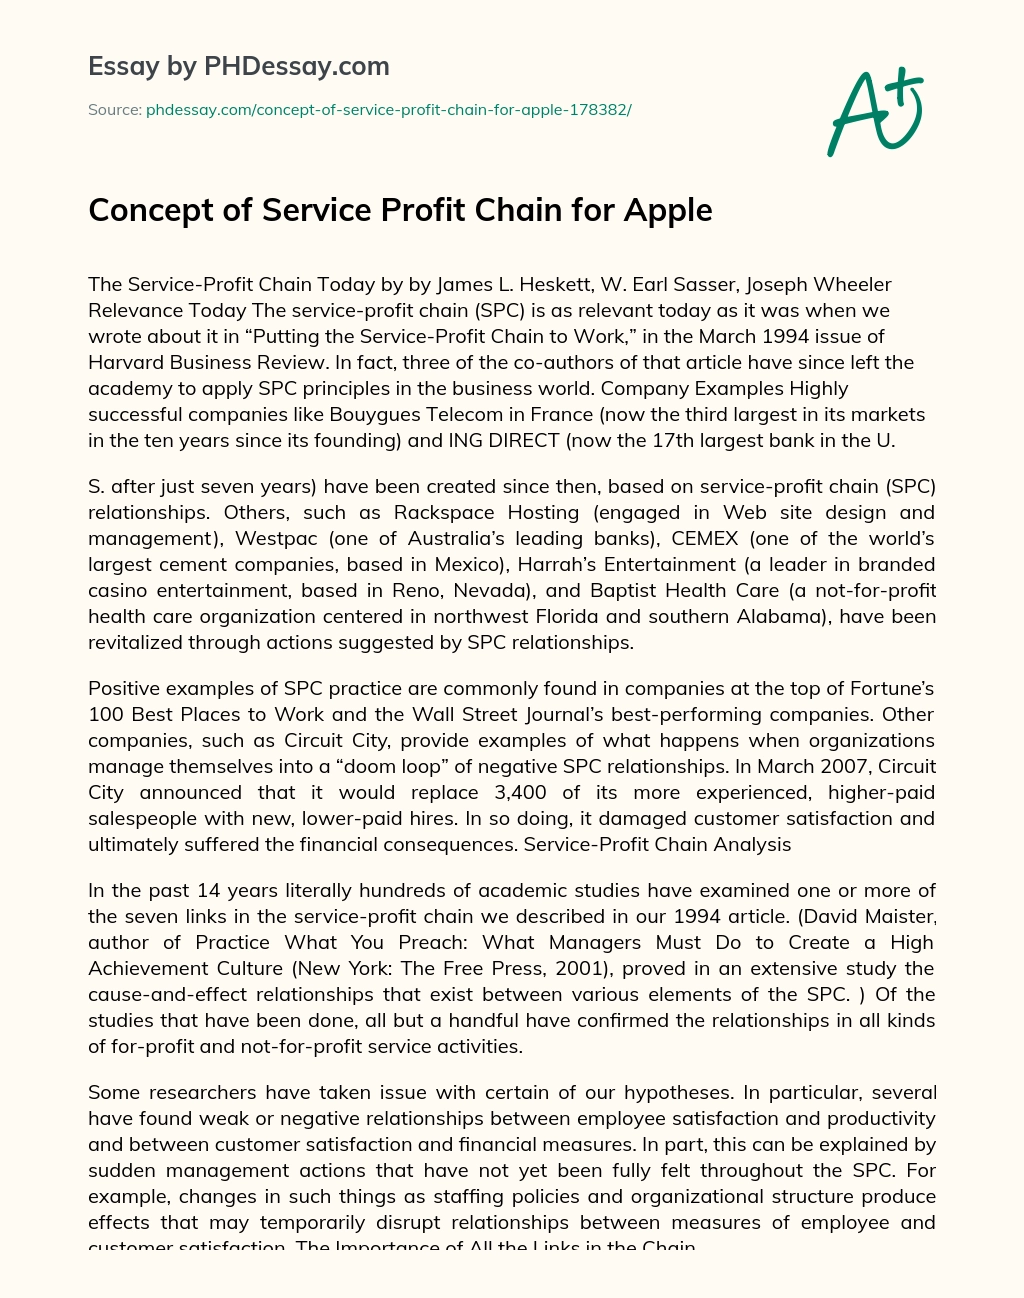 Concept of Service Profit Chain for Apple essay